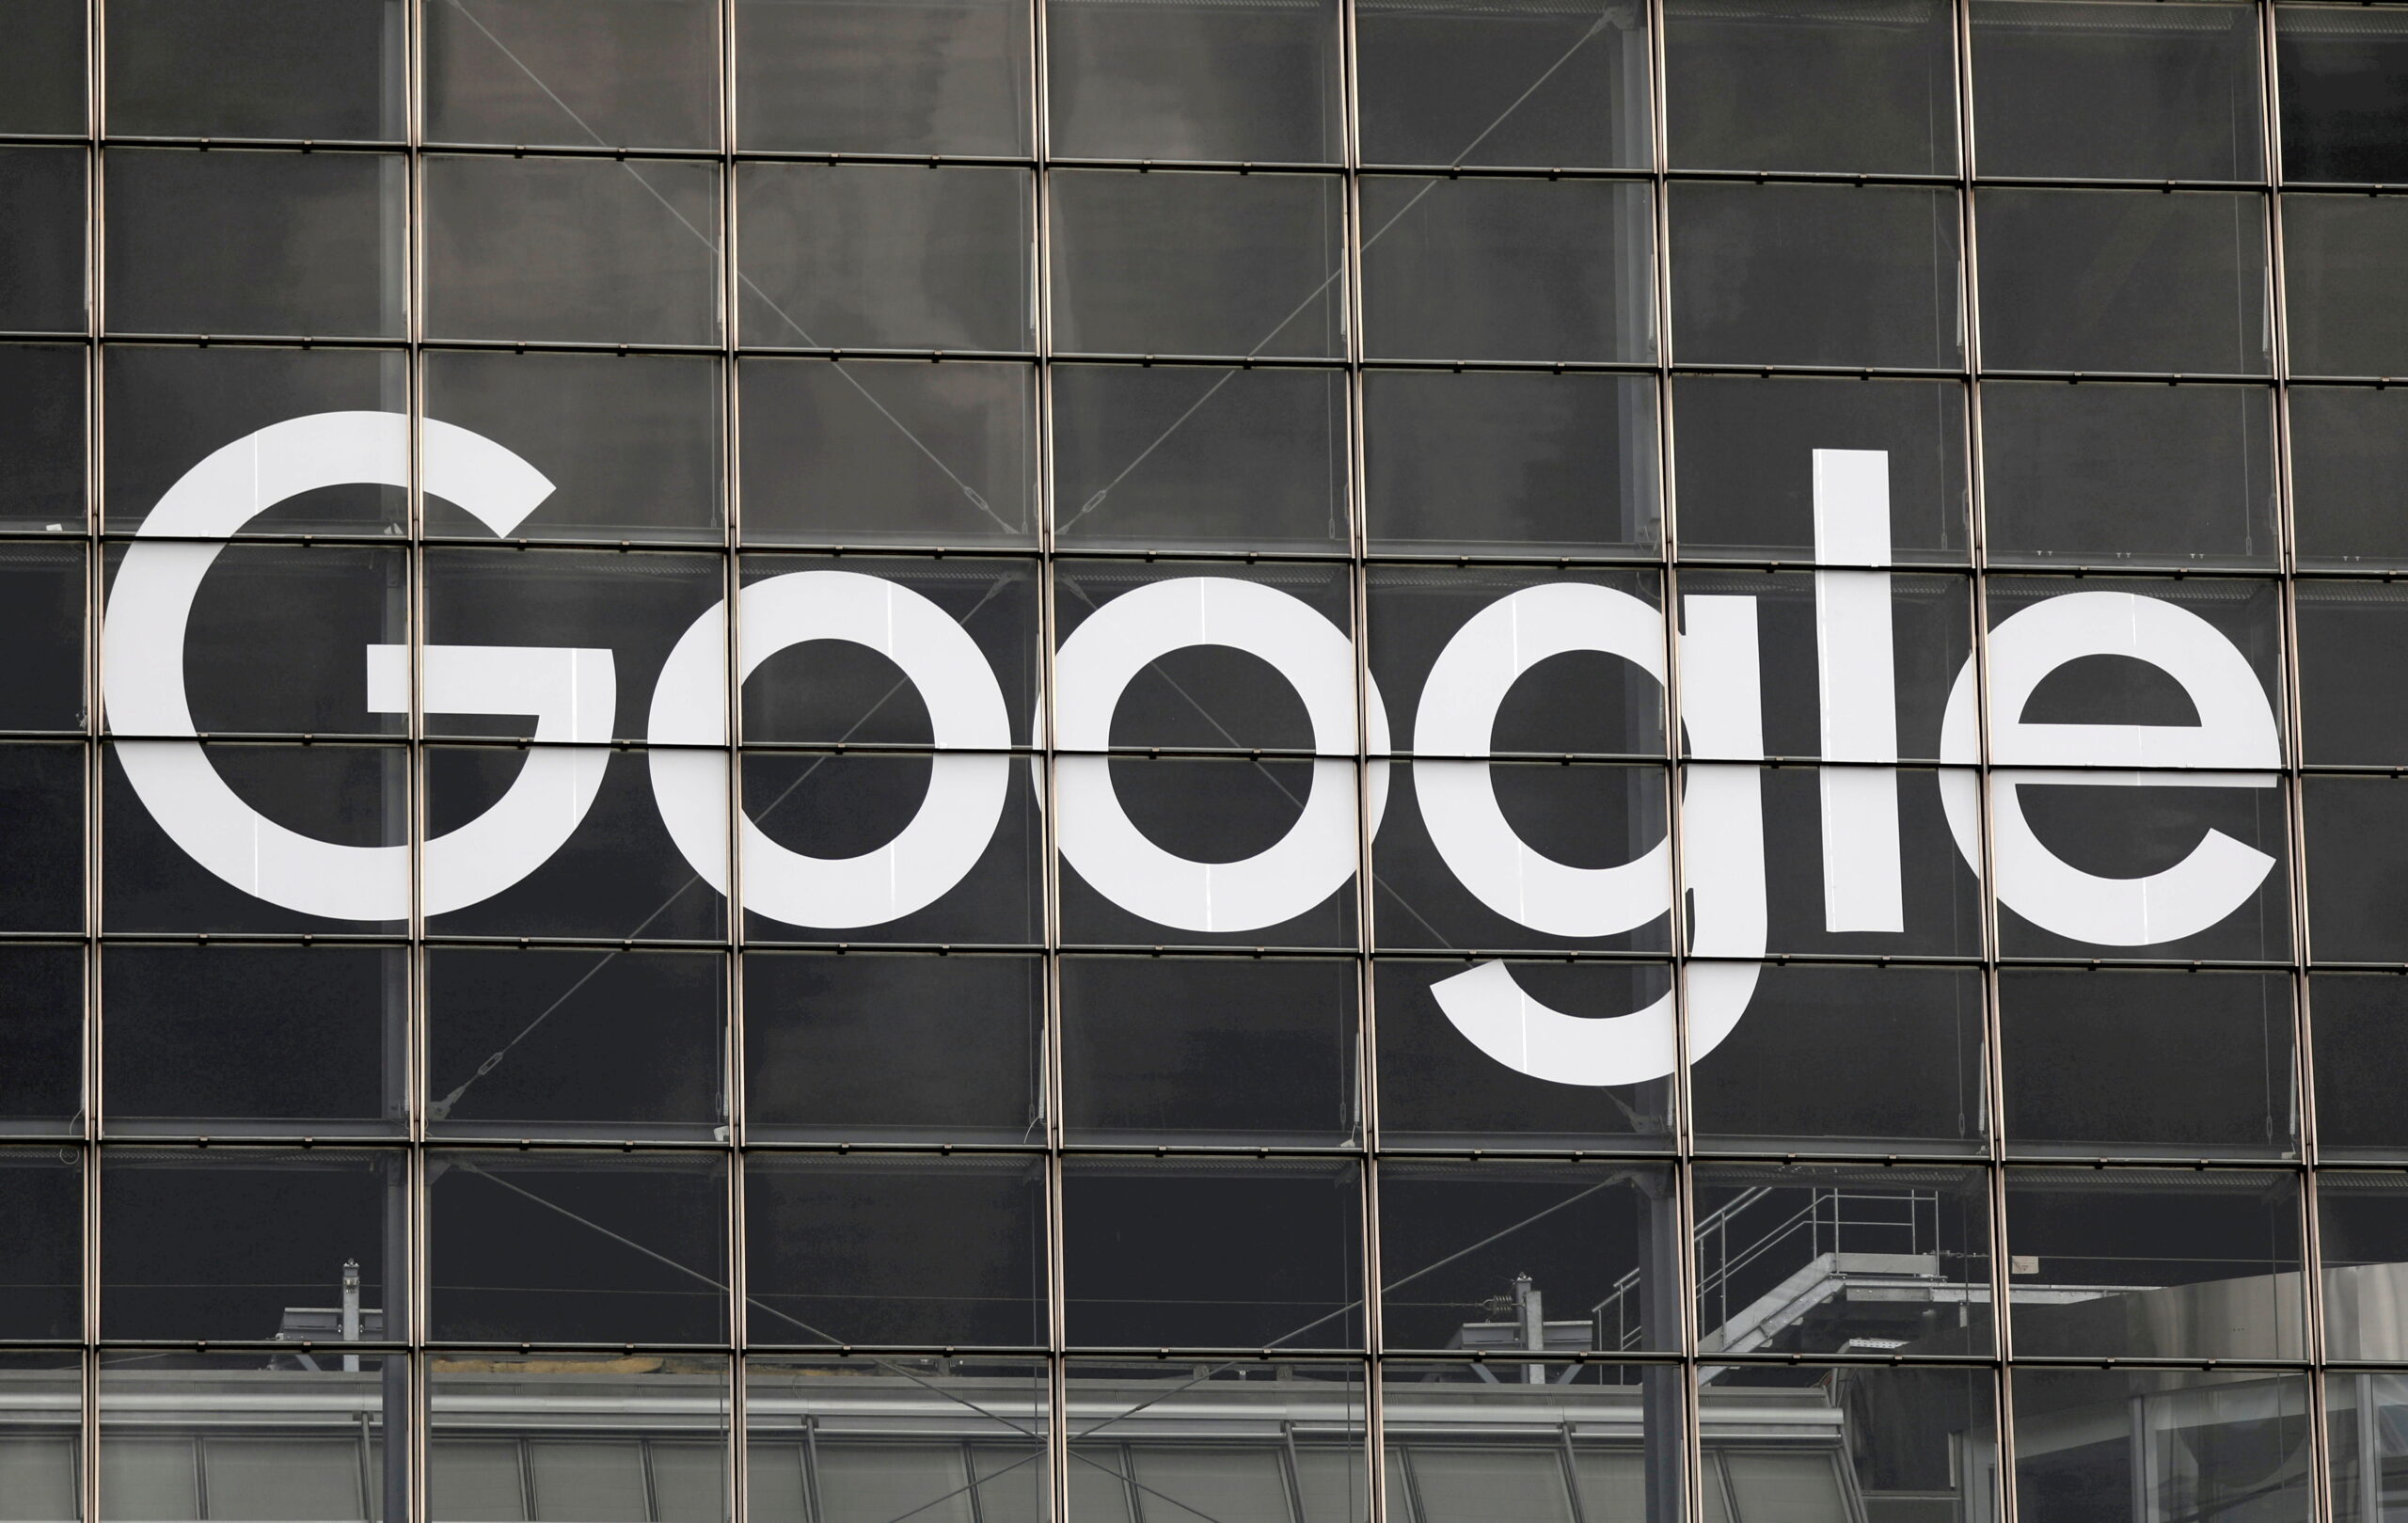  France fines Google 500 mln euros over copyright row